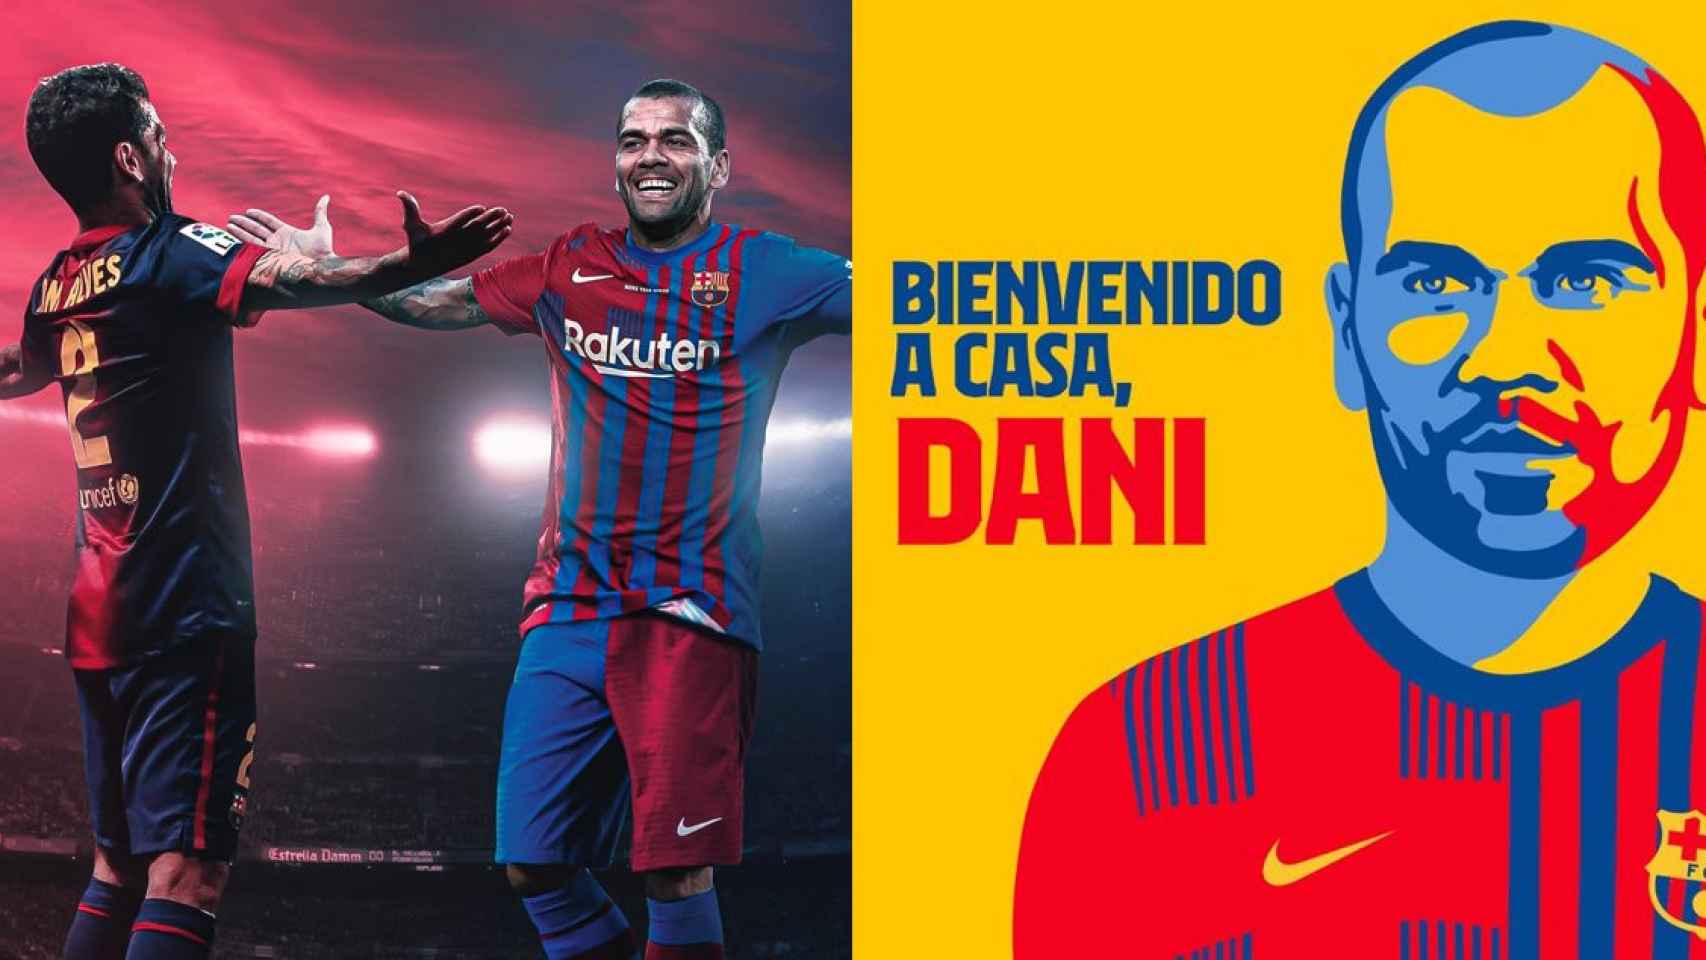 Dani Alves, el nuevo fichaje del FC Barcelona / CM